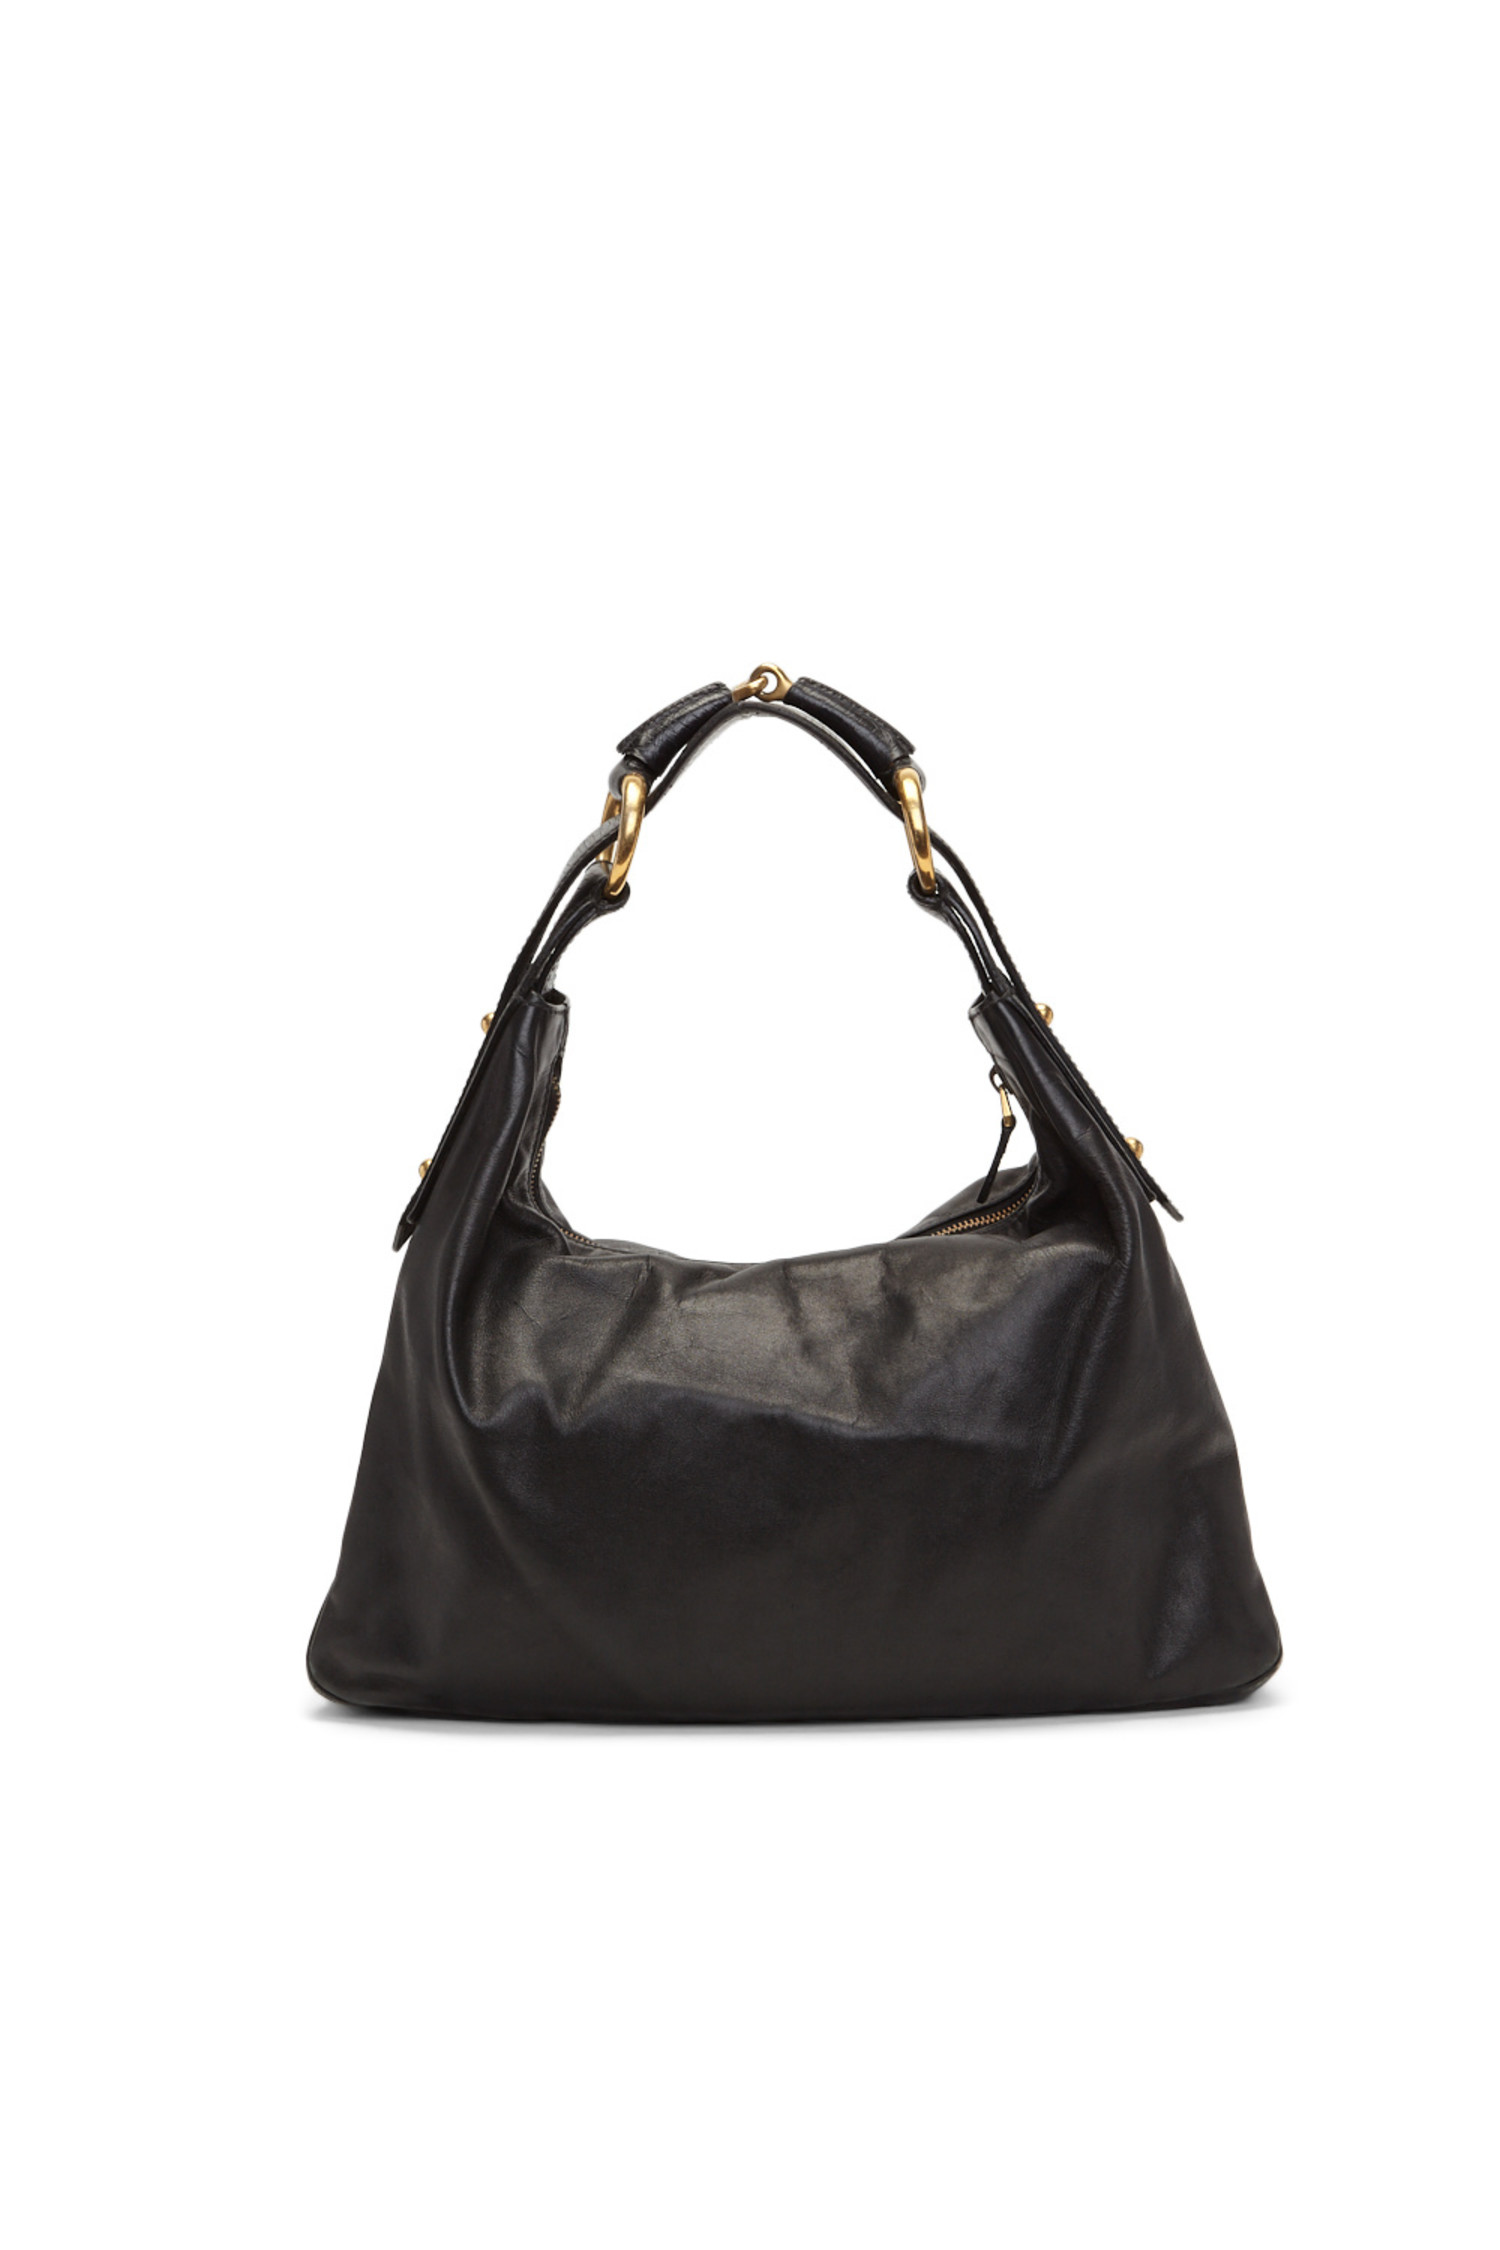 gucci black leather hobo bag